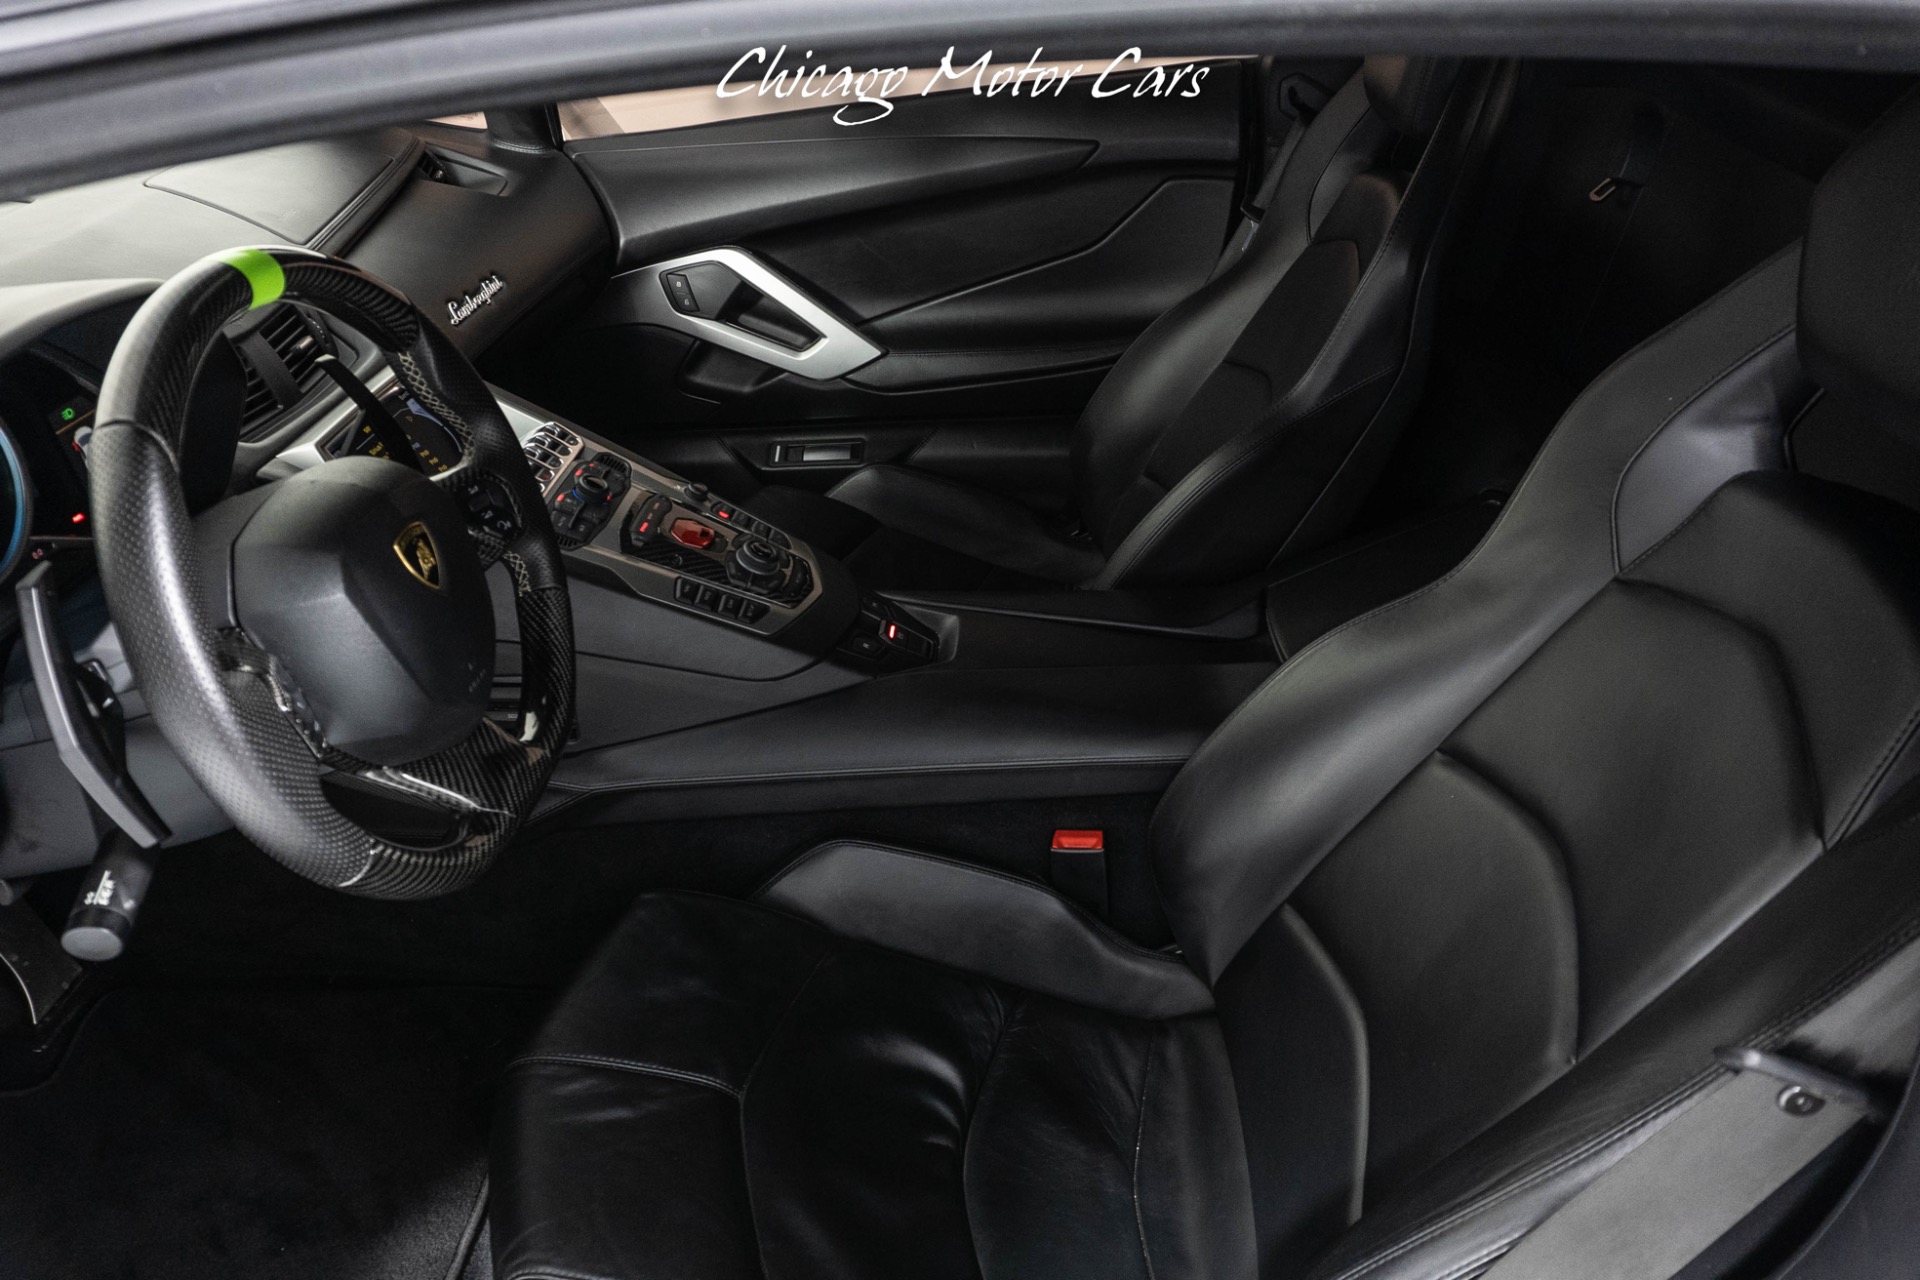 Used-2012-Lamborghini-Aventador-LP700-4-Coupe-Over-275k-UGR-1R-BUILD--Billet-intakesEngine-refresh